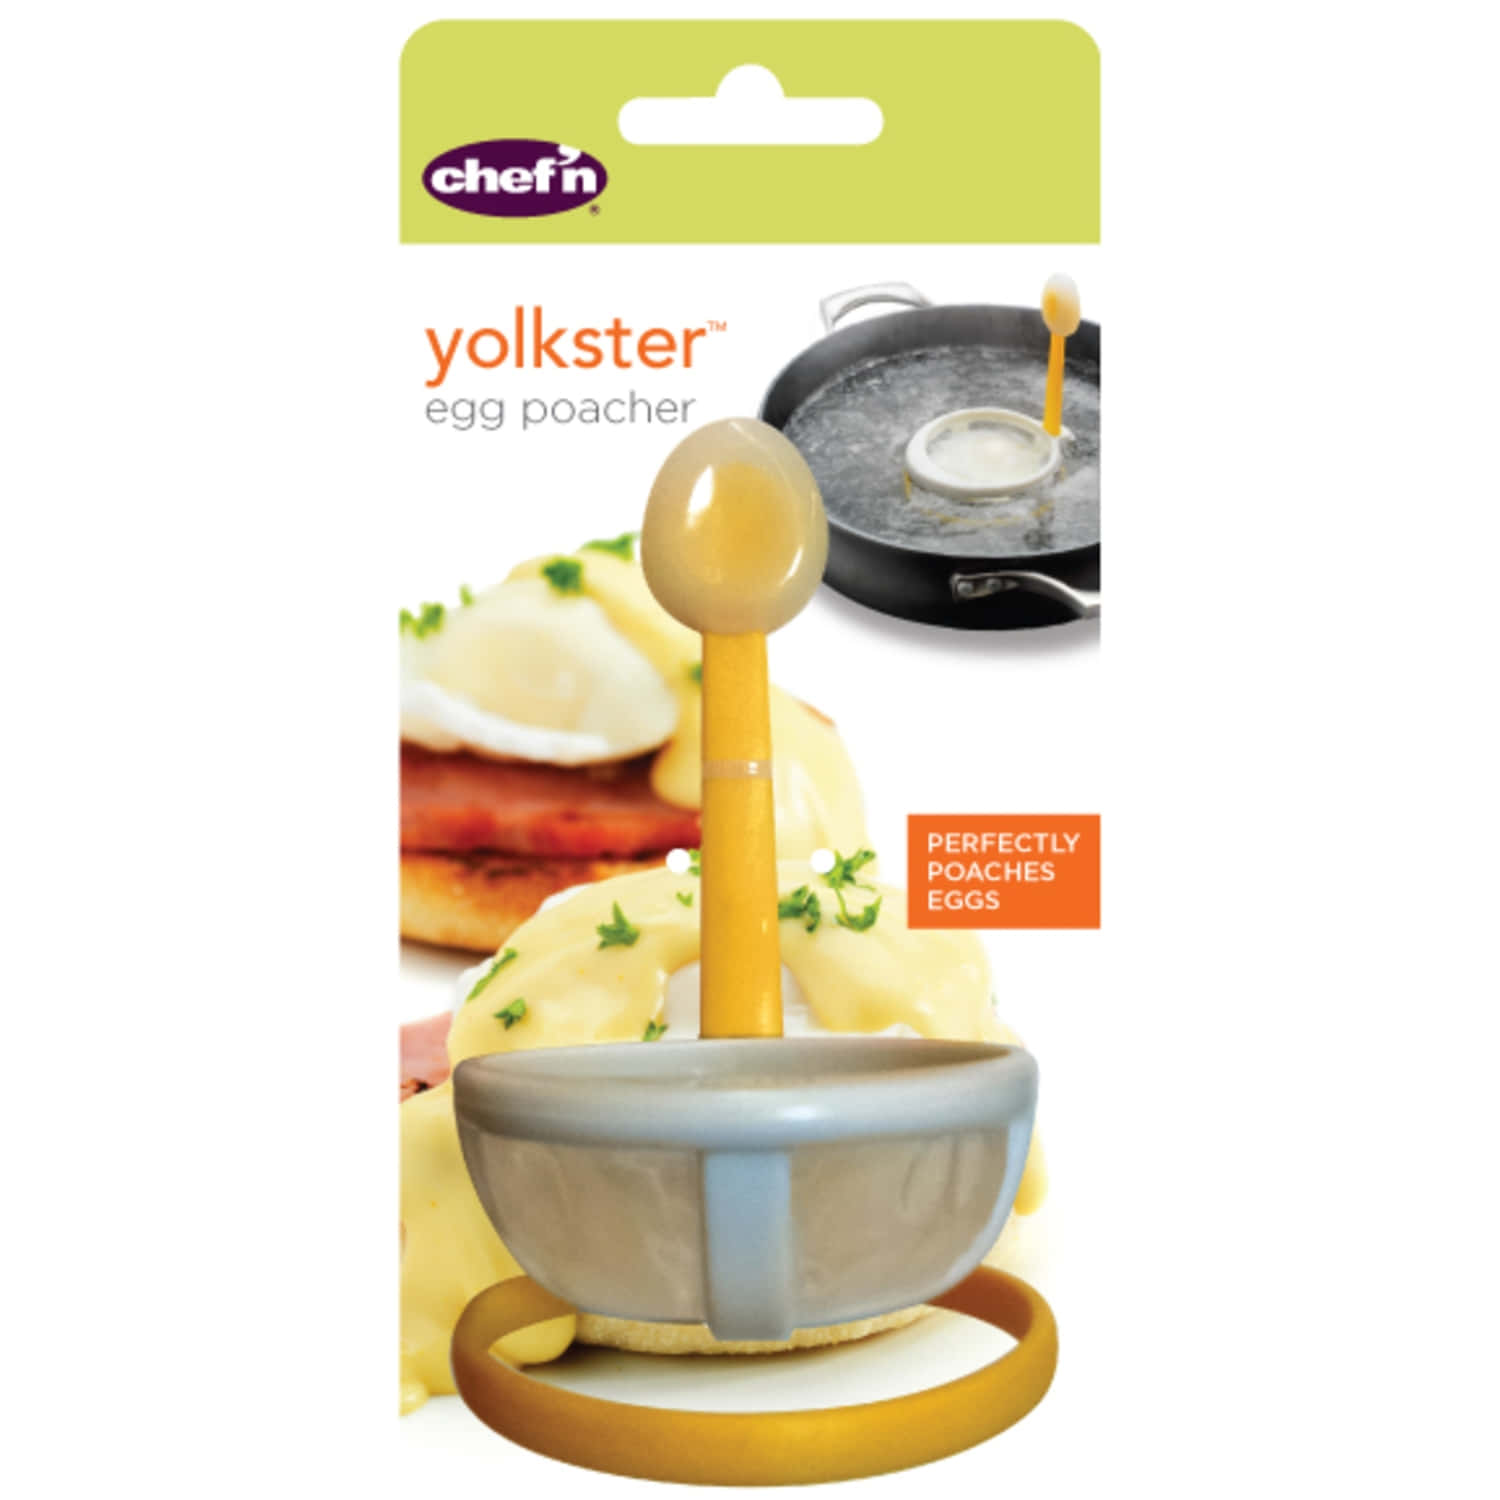 Chef'n Yolkster Egg Poacher